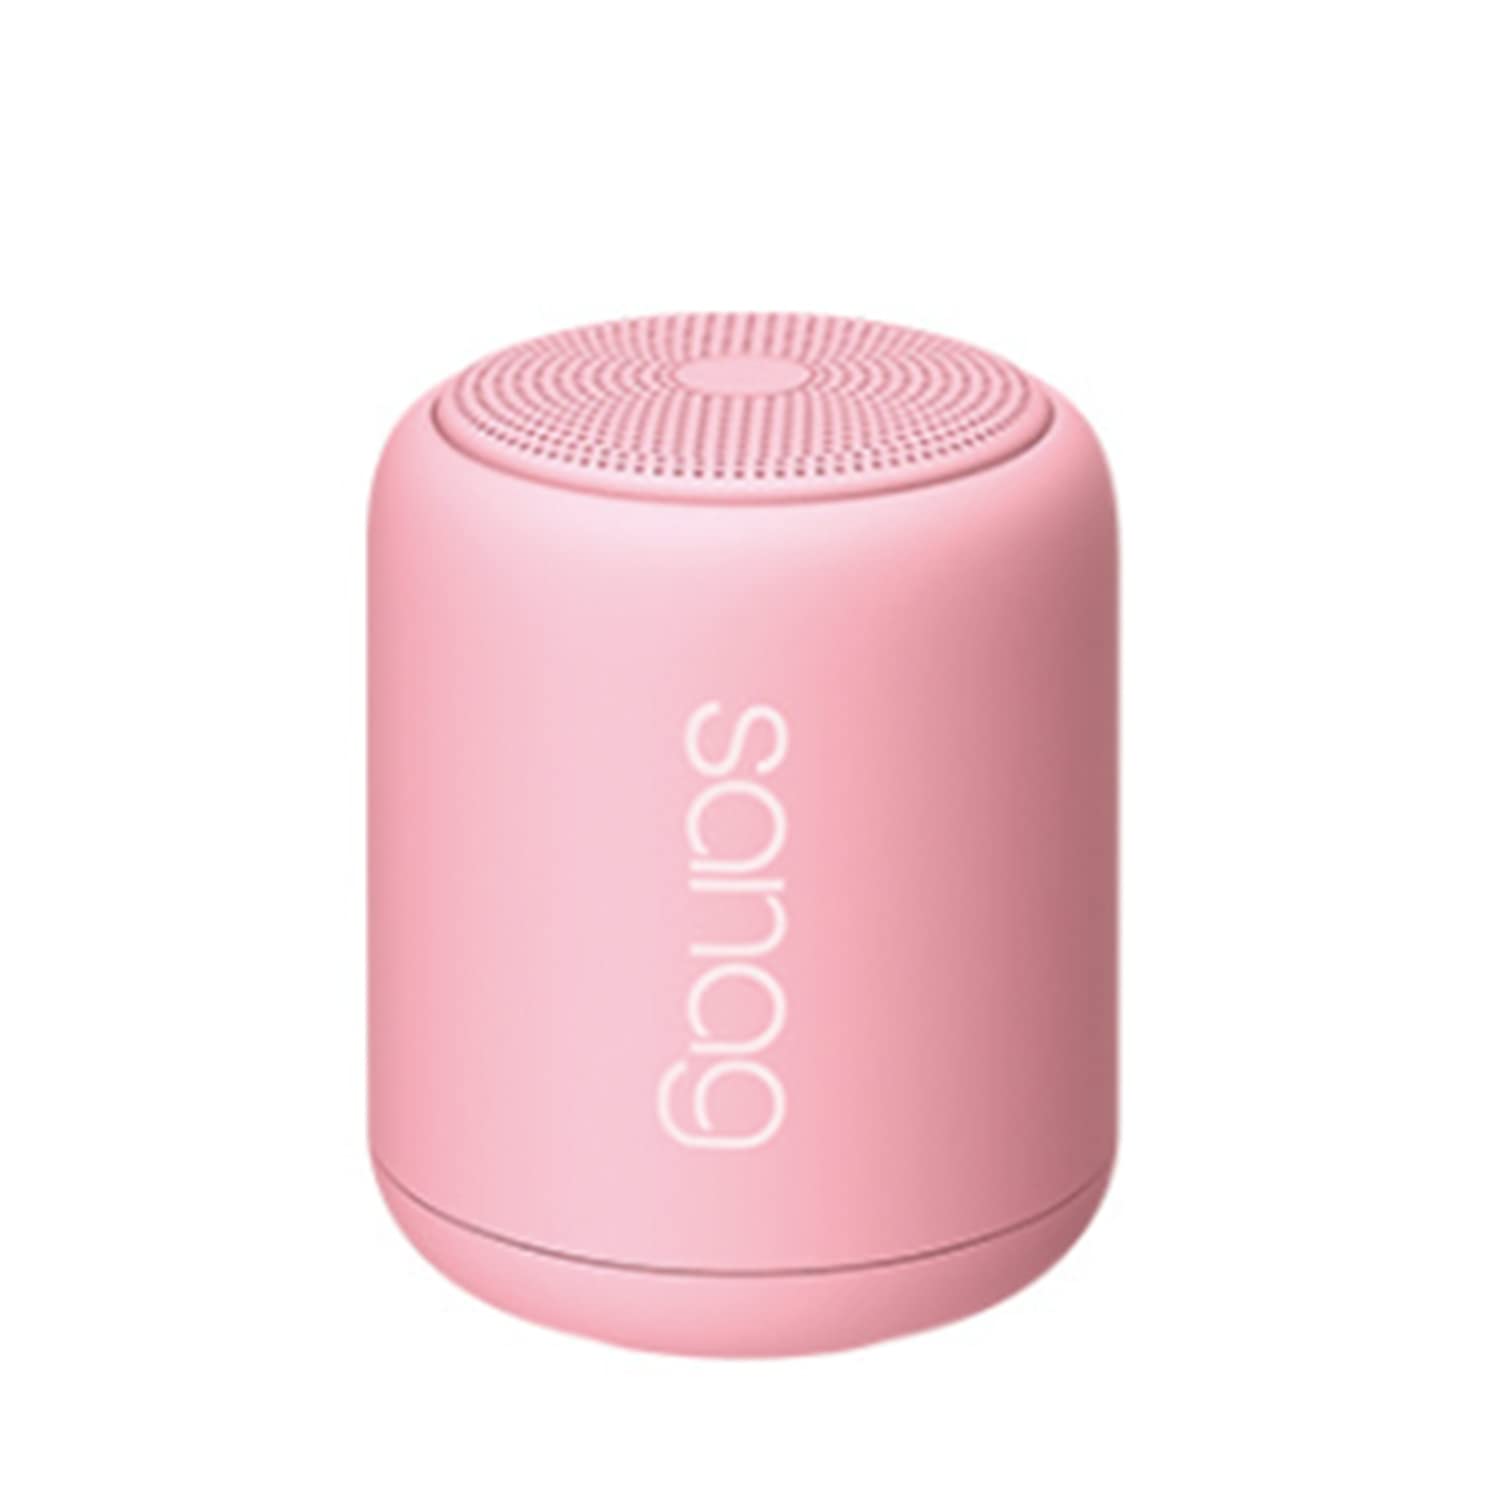 Sanag X6S Portable Bluetooth Speaker pink in BD